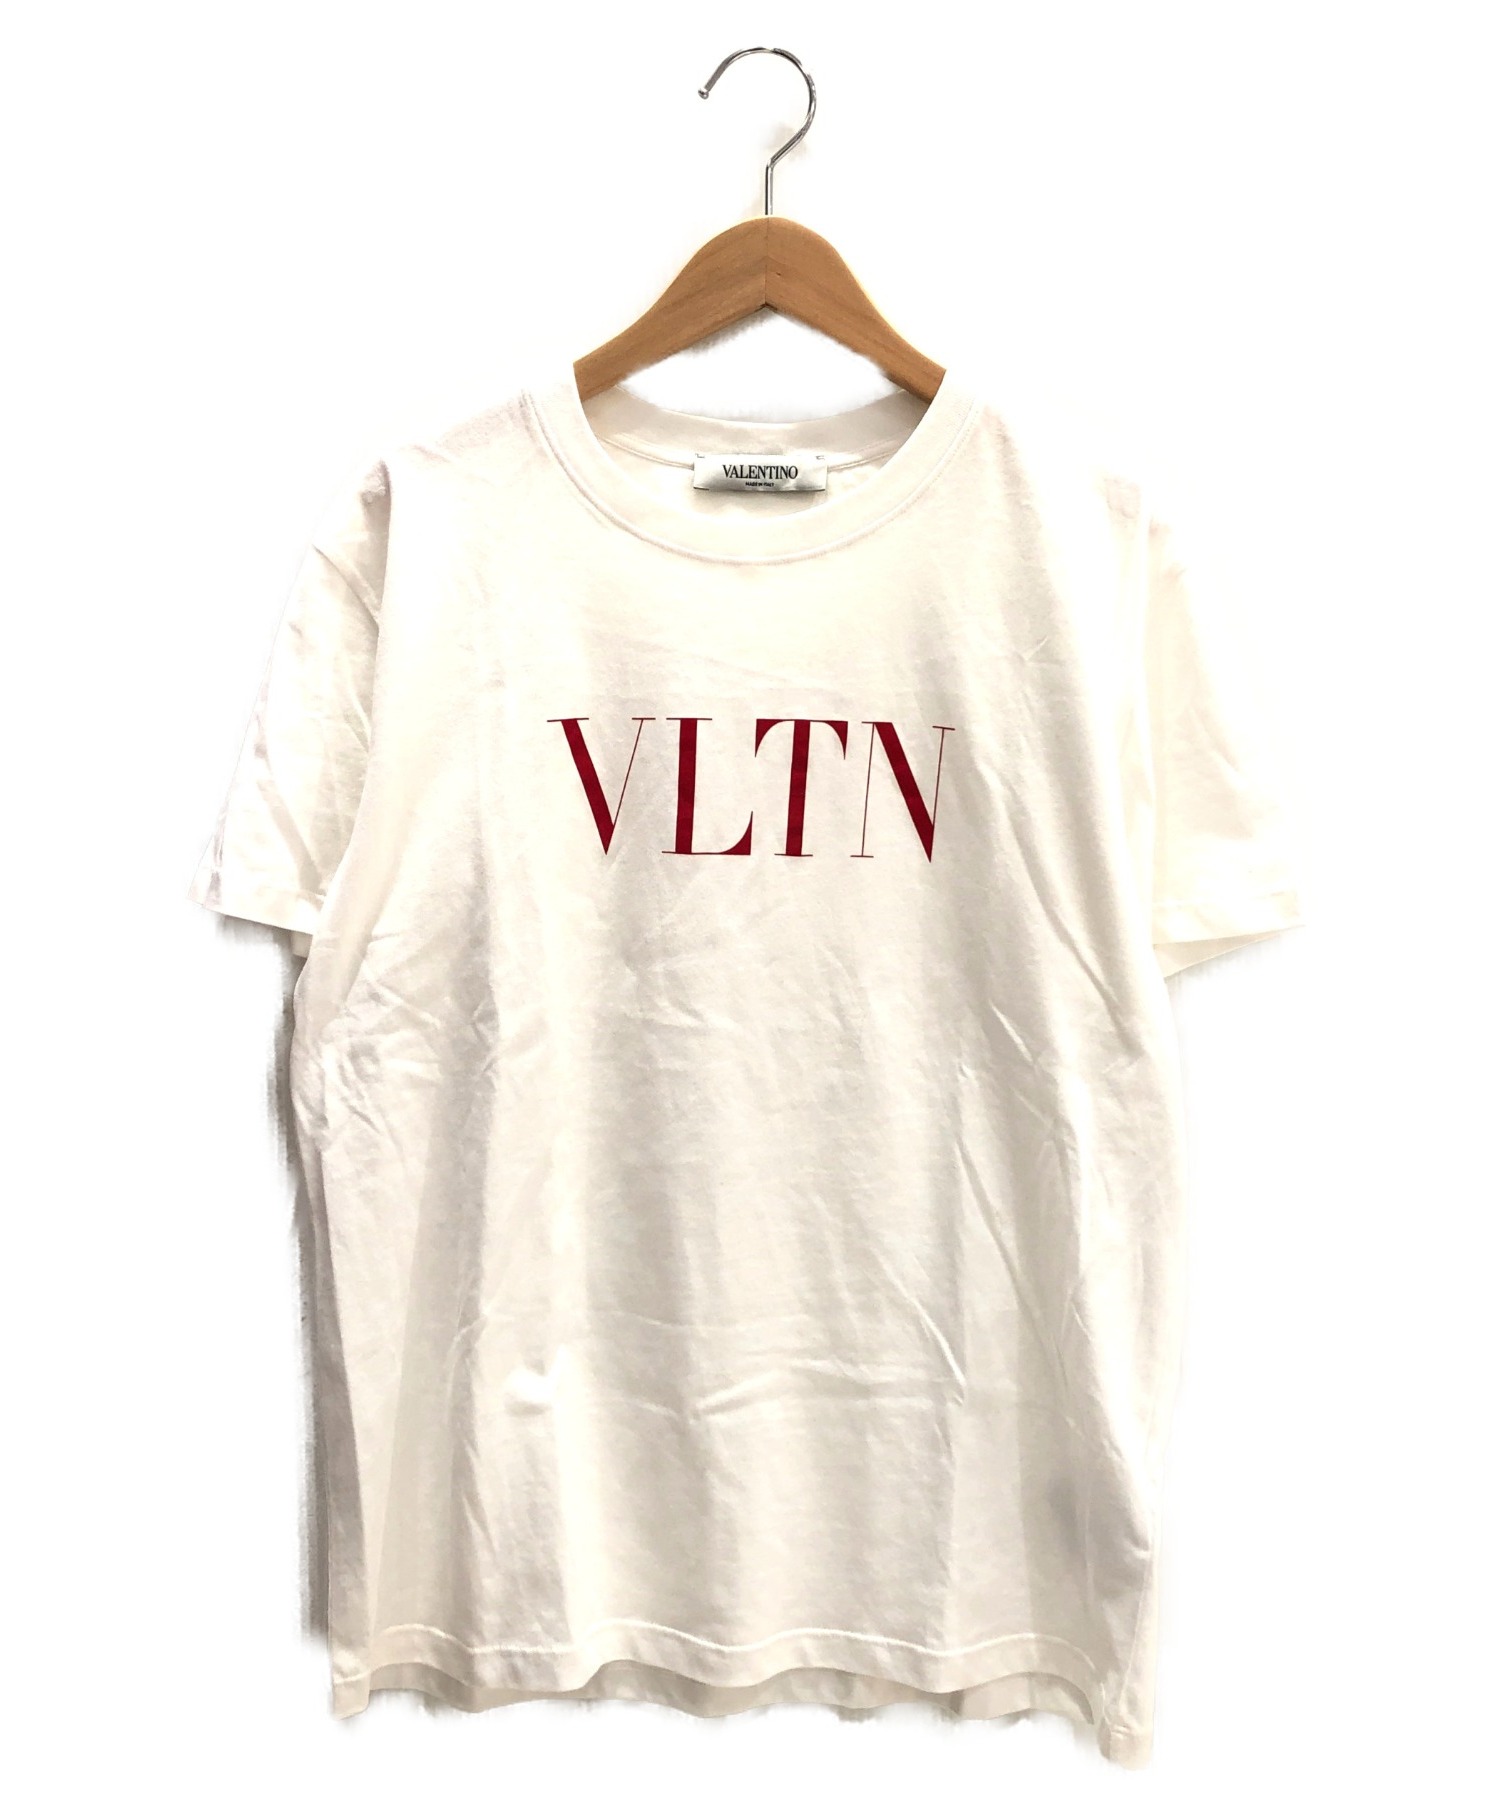 VALENTINO (ヴァレンティノ) VLTN Tシャツ ホワイト サイズ:XXS